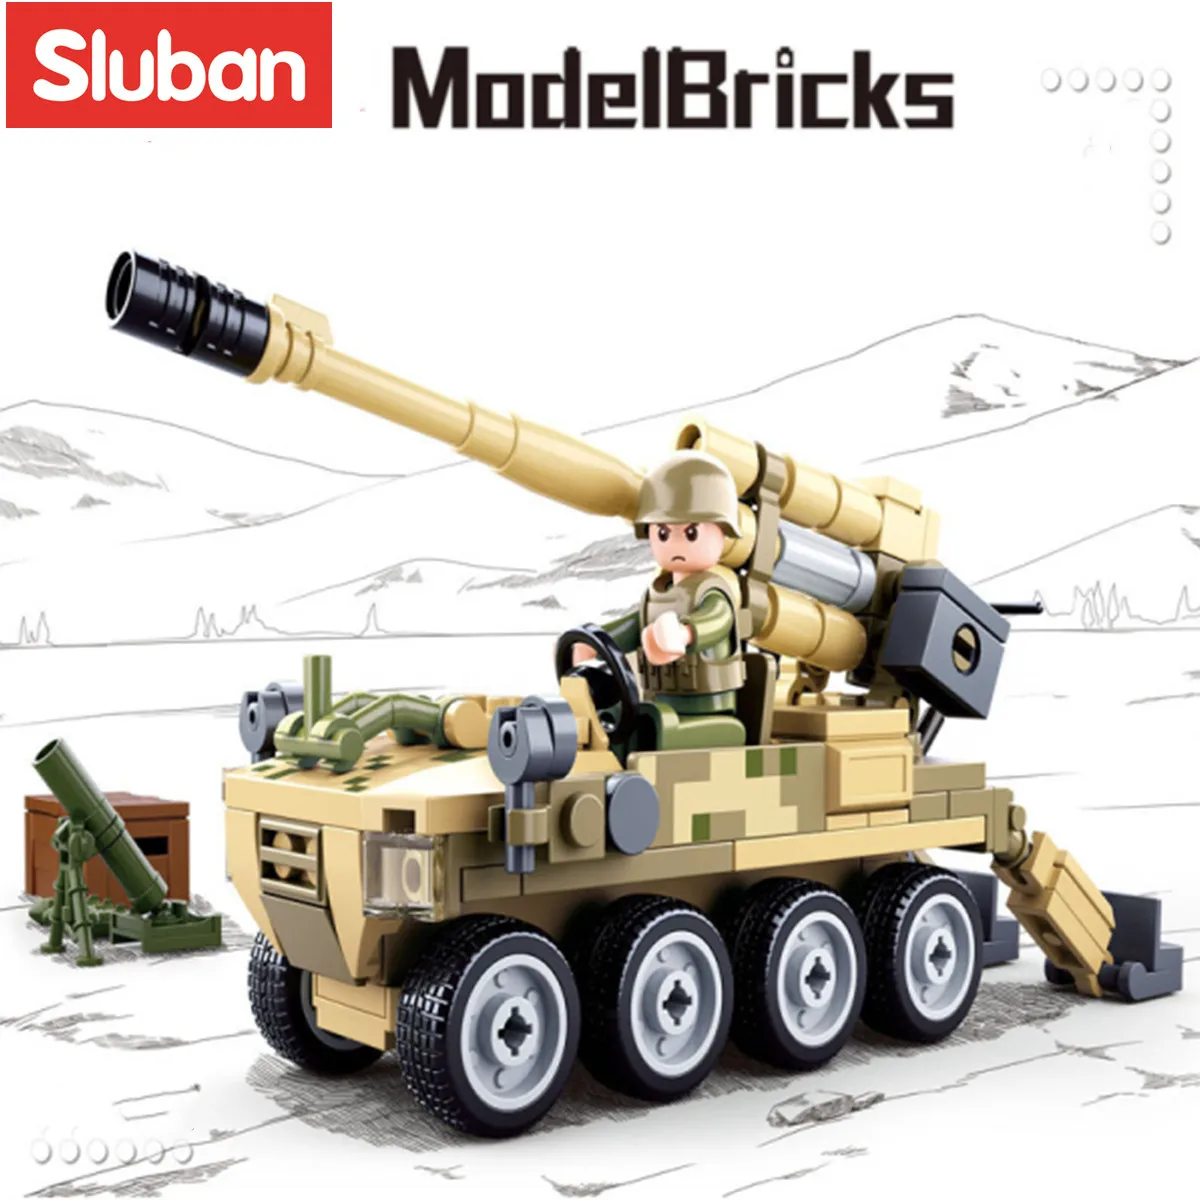 Sluban Building Block ของเล่น Morden ทหาร120ล้อ Self-Propelled Artillery 159PCS อิฐ B0751กองทัพรถบรรทุกก่อสร้าง Kiit